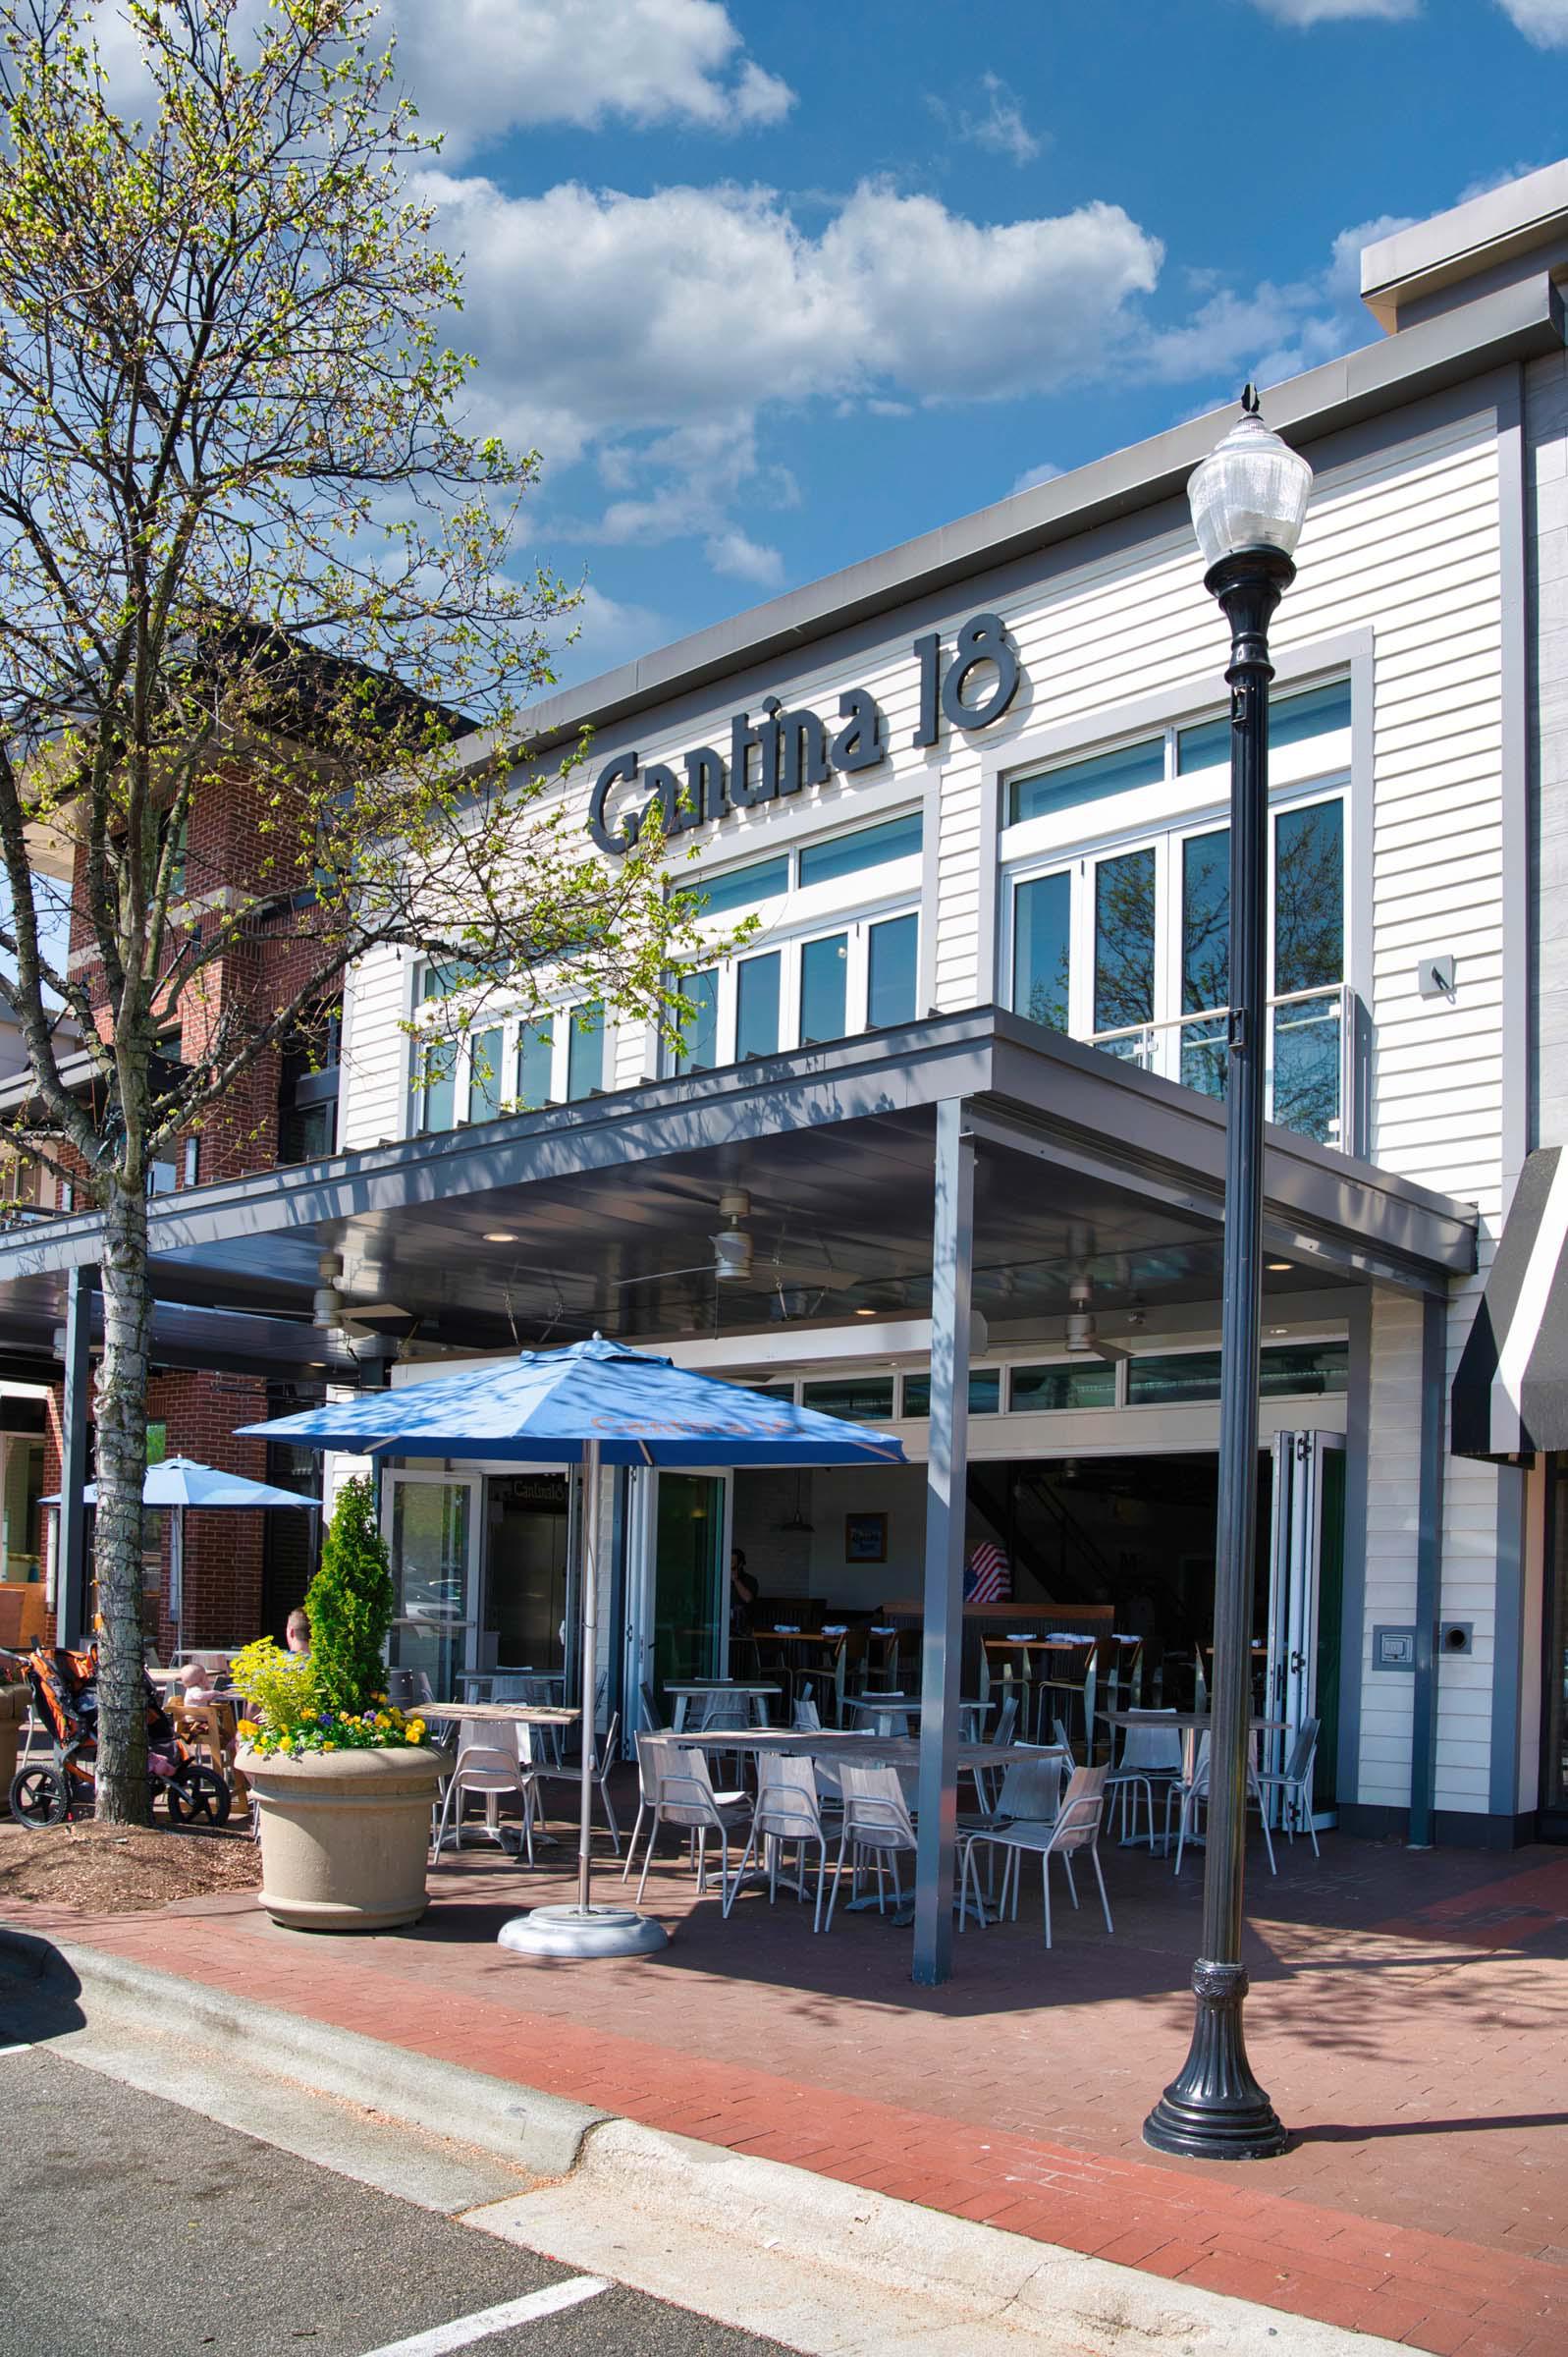 Cantina 18 restaurant in Village District, Raleigh